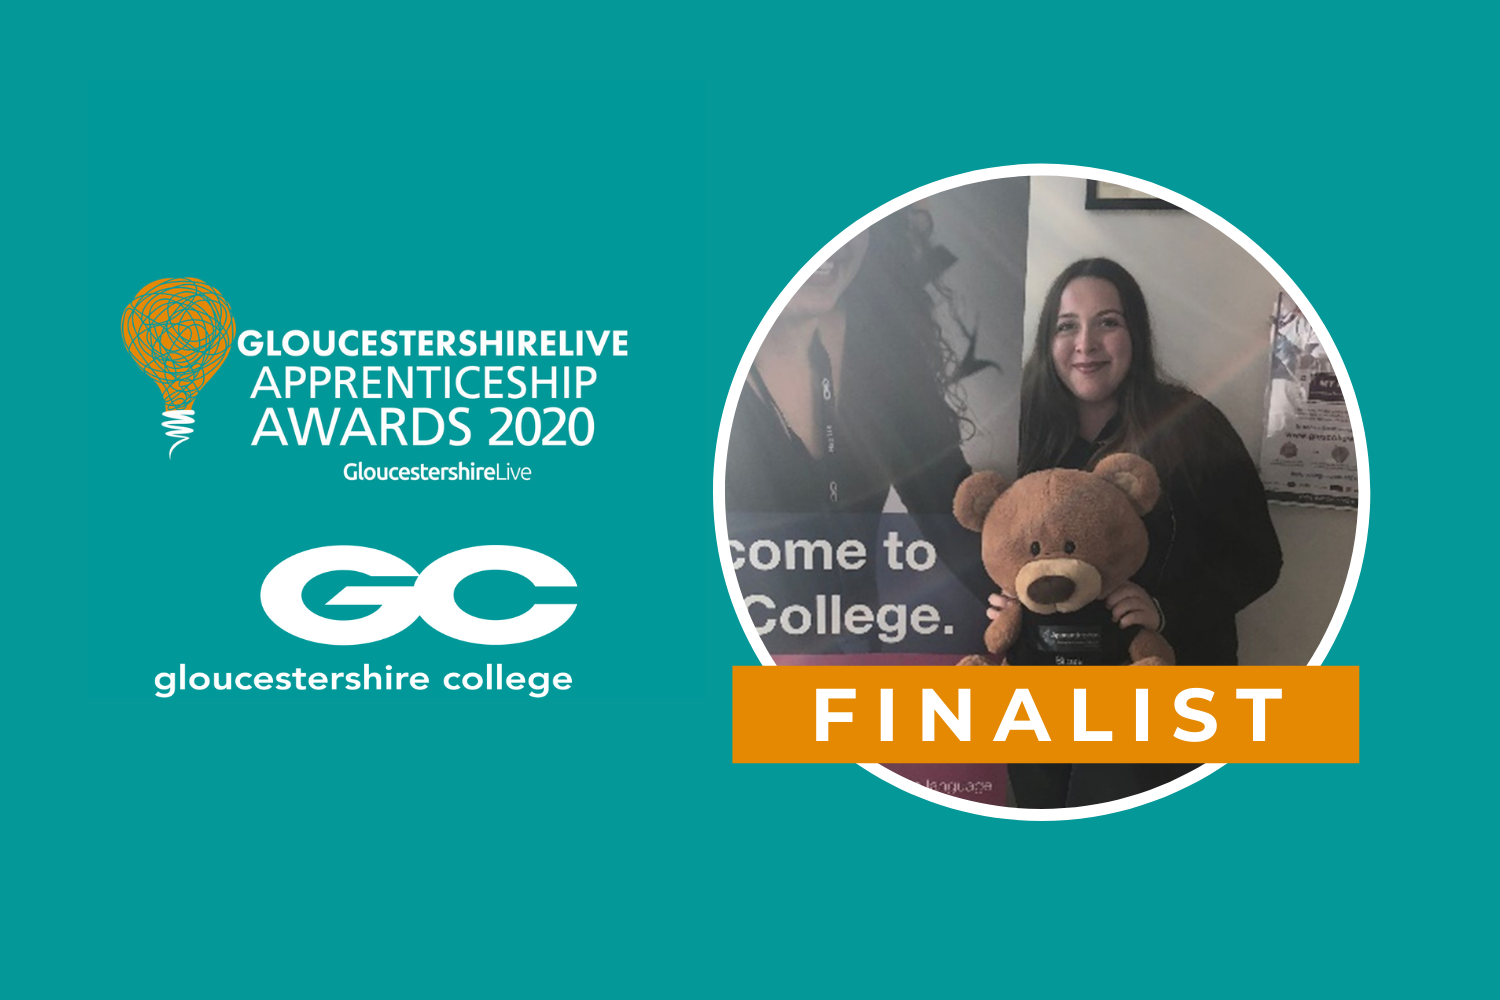 Apprentice Spotlight: Ellie Martin, GloucestershireLive Apprenticeship Awards 2020 Finalist